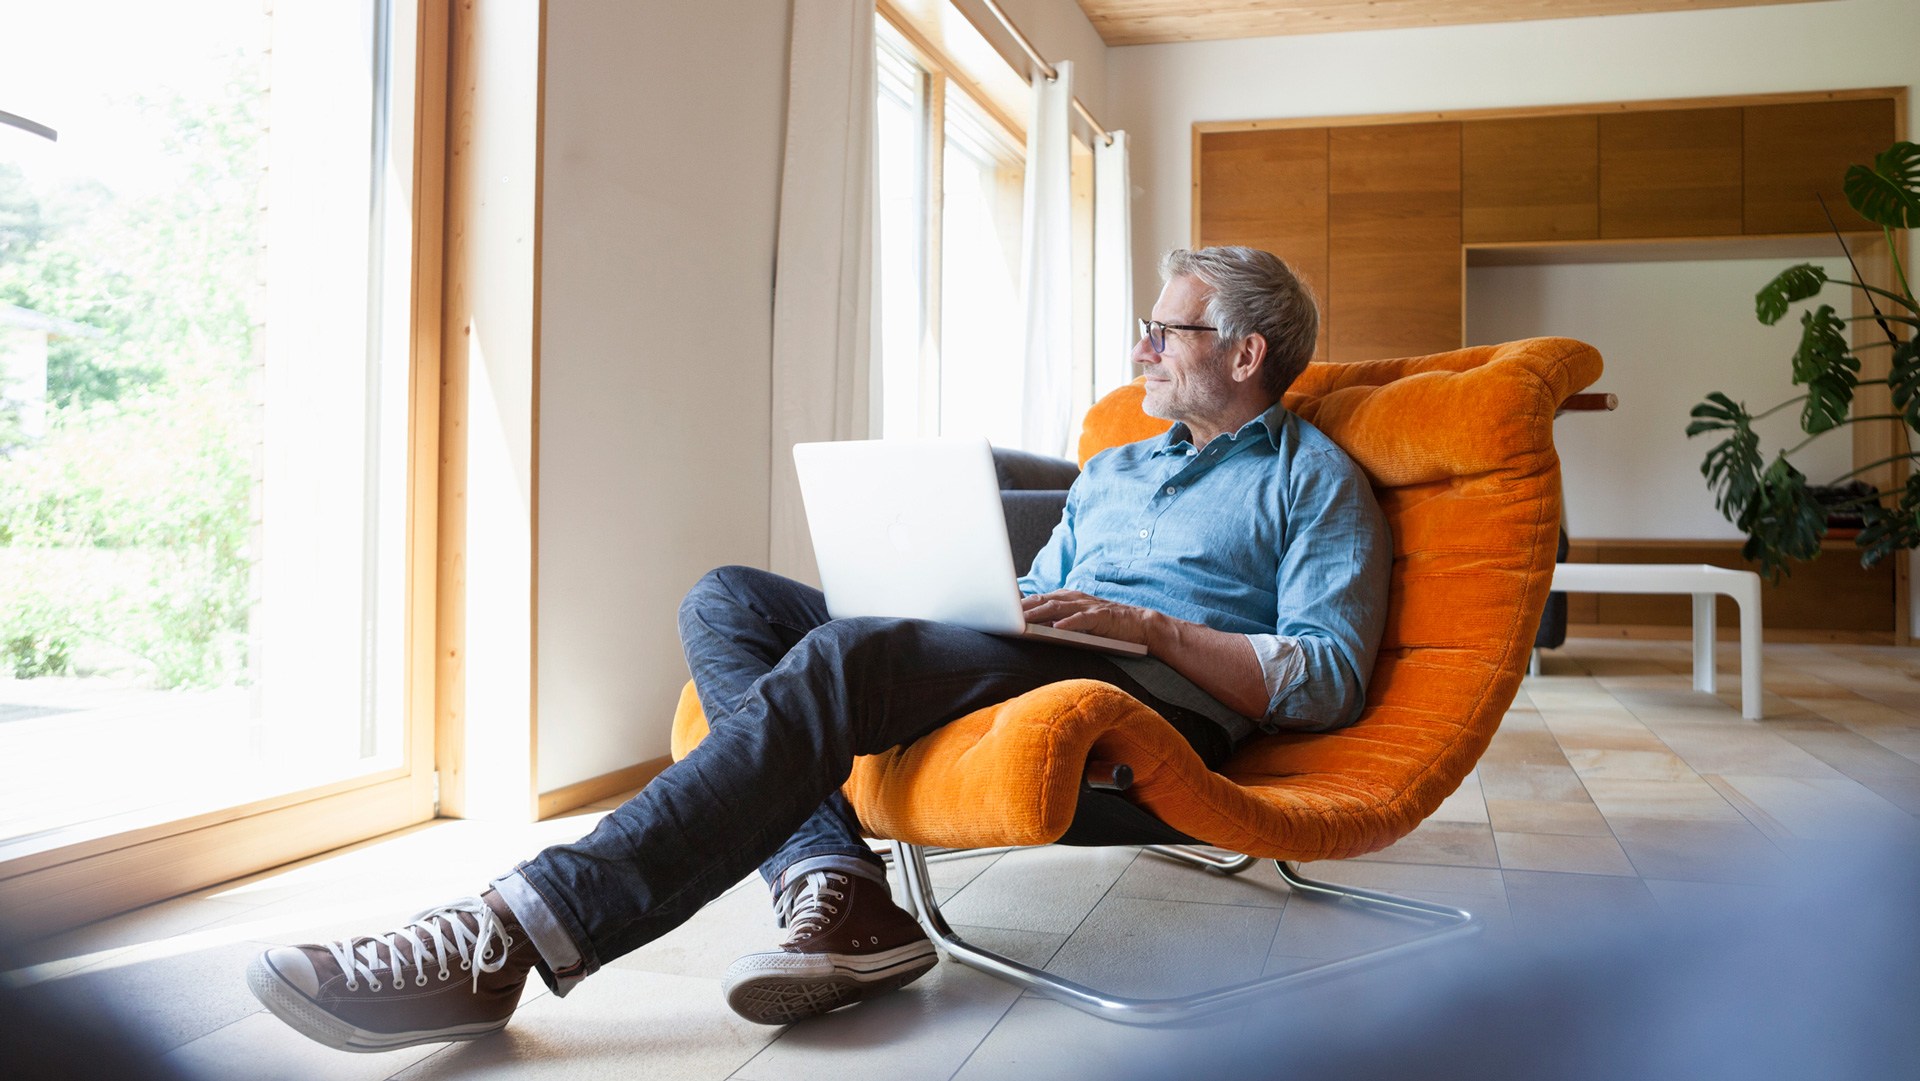 Mature man sitting on orange chair with laptop